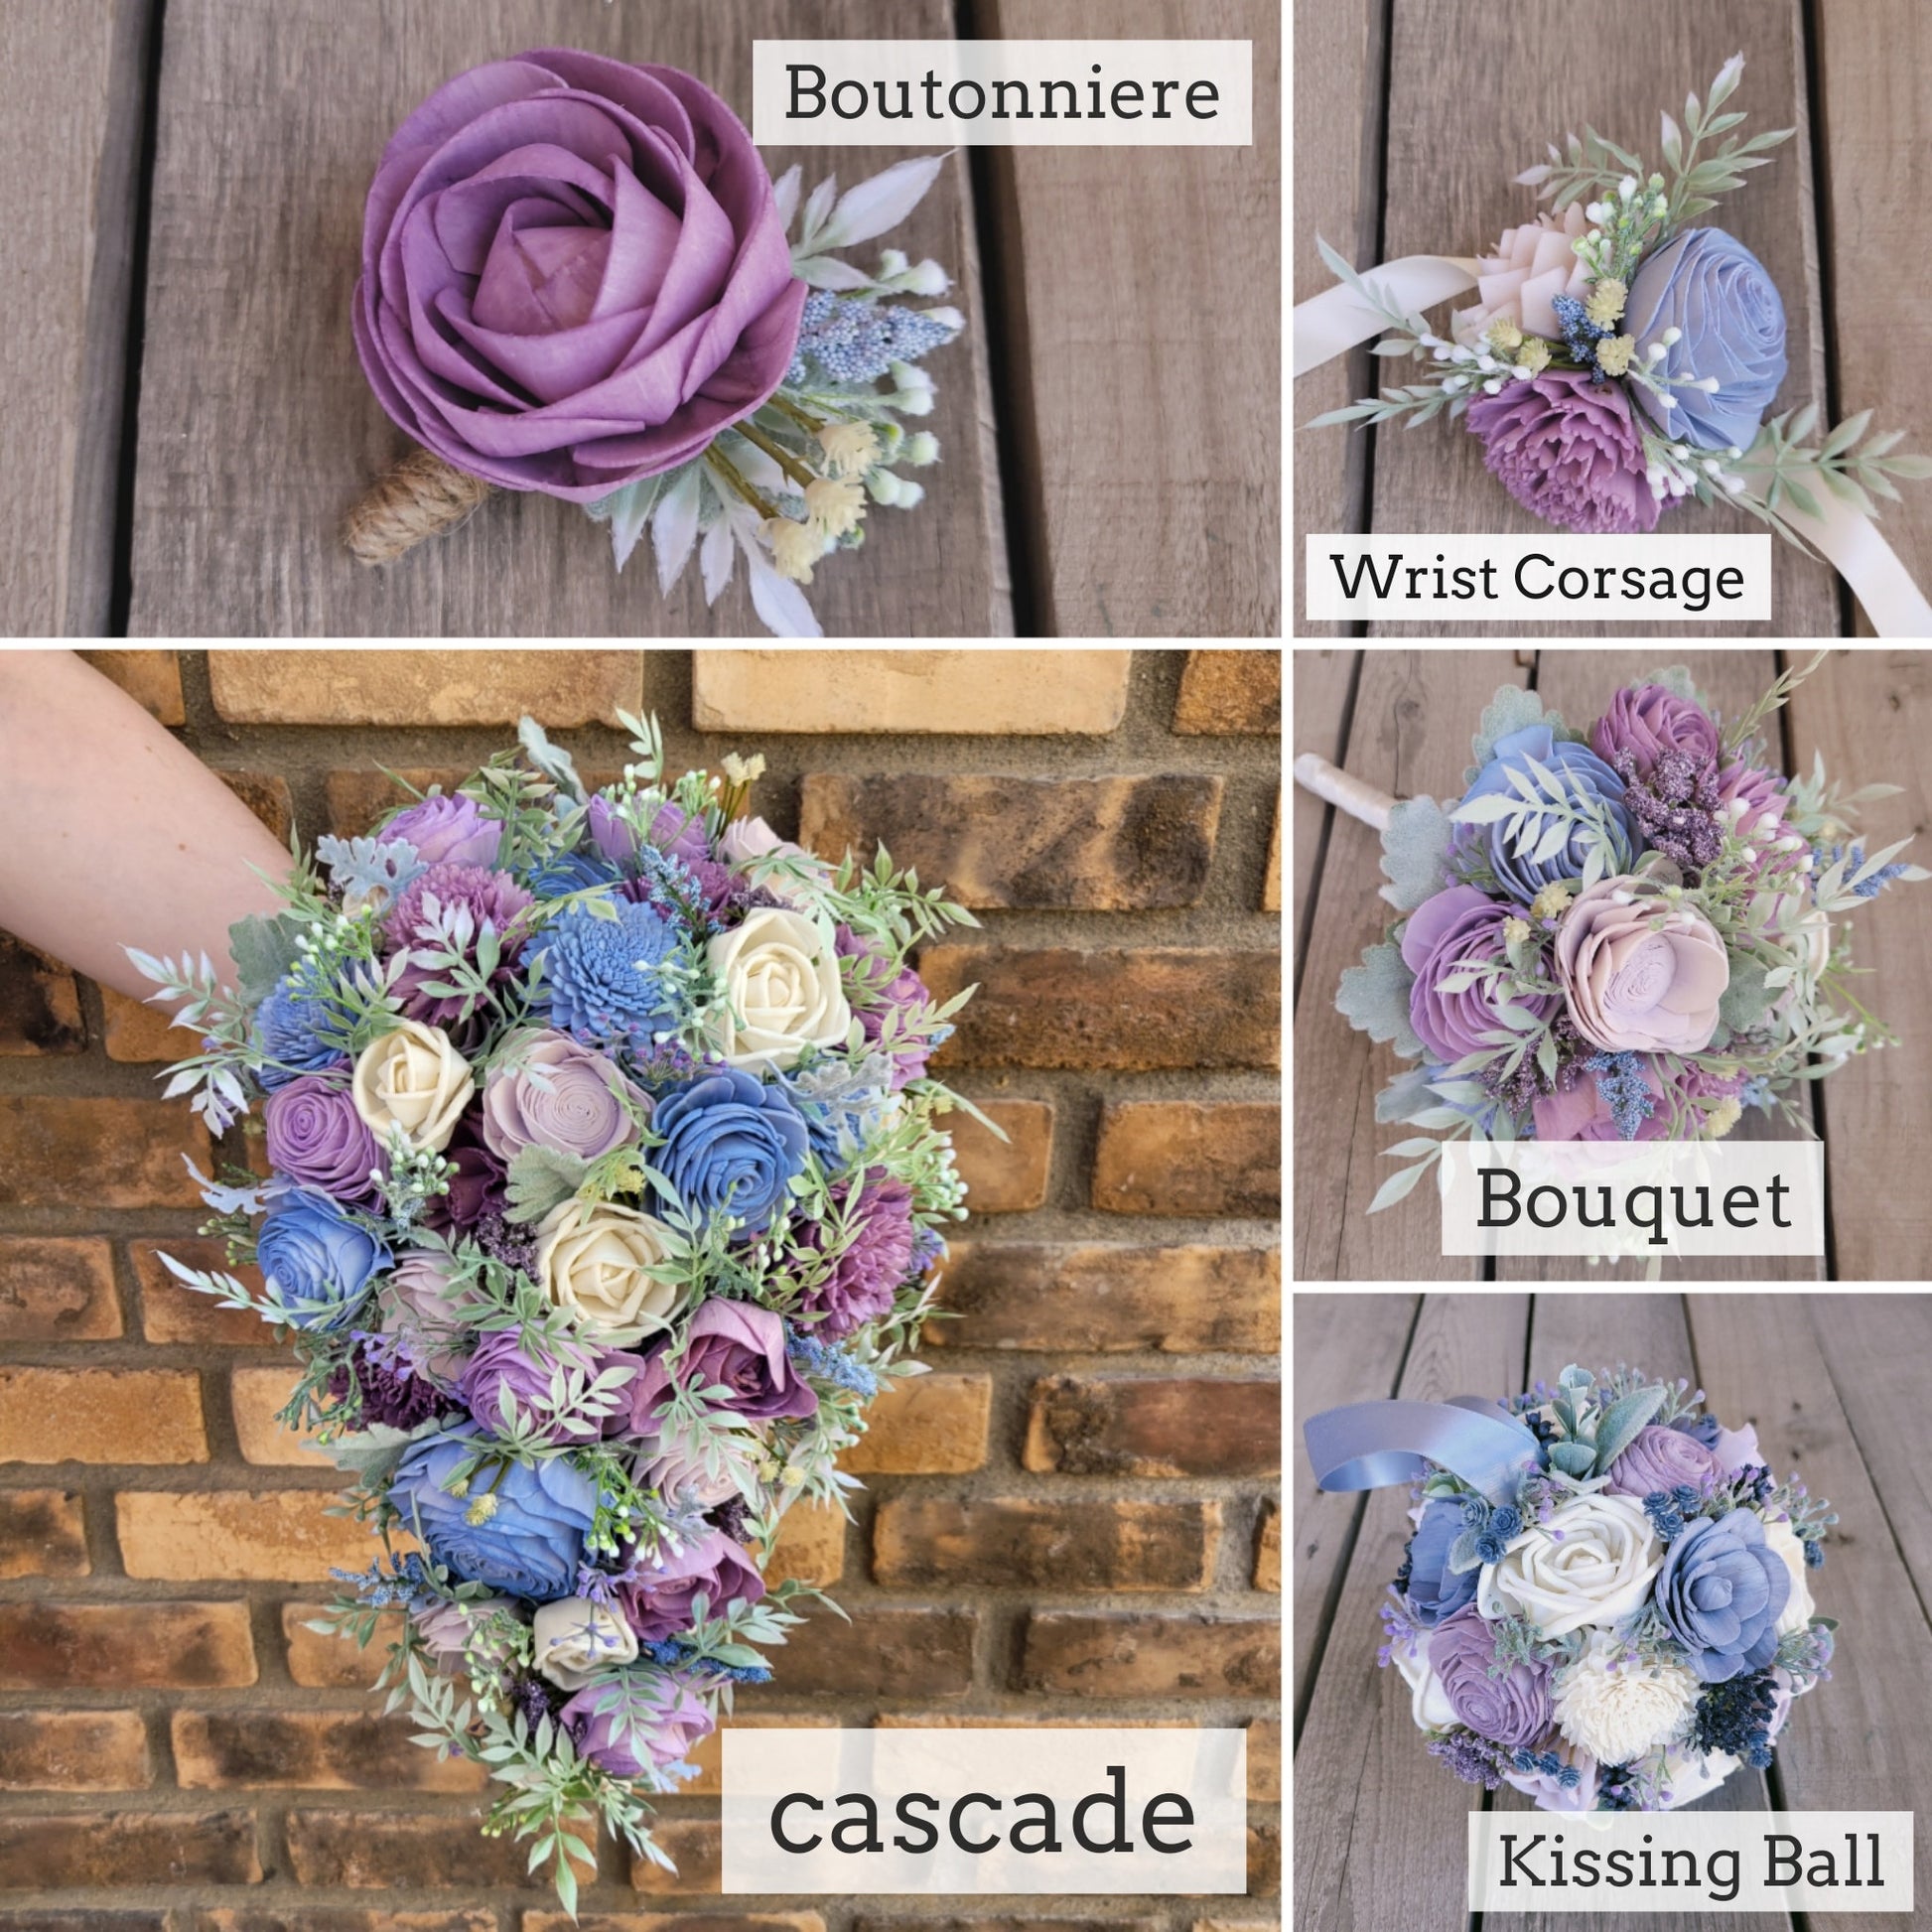 Lavender and Burlap Bridal Bouquet, Rustic Wood Flower Bouquet, Artificial Bridal Bouquet, Wooden Wedding Flowers